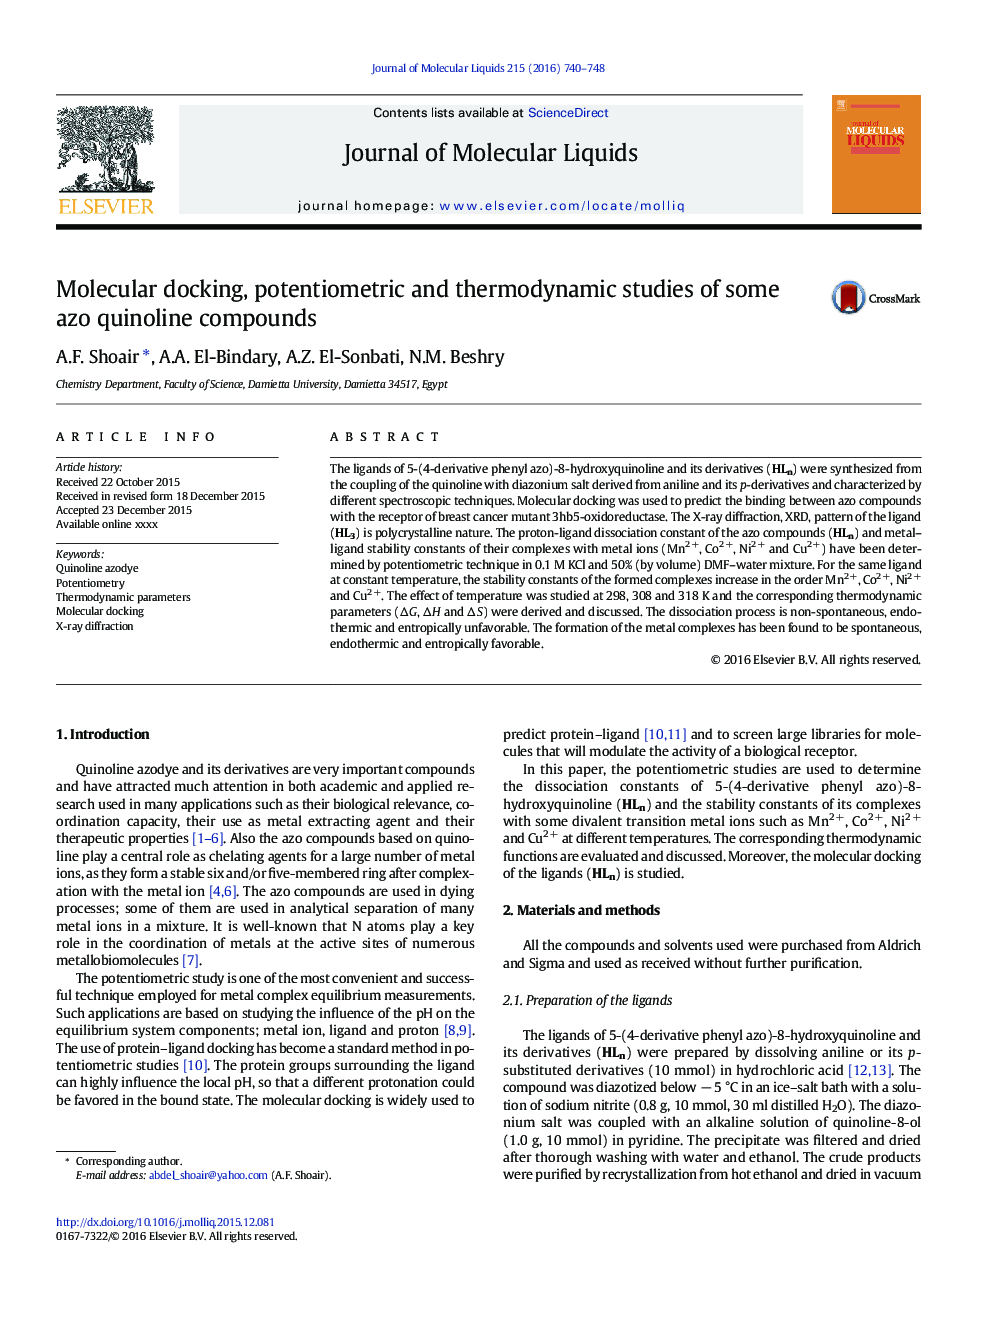 Molecular docking, potentiometric and thermodynamic studies of some azo quinoline compounds